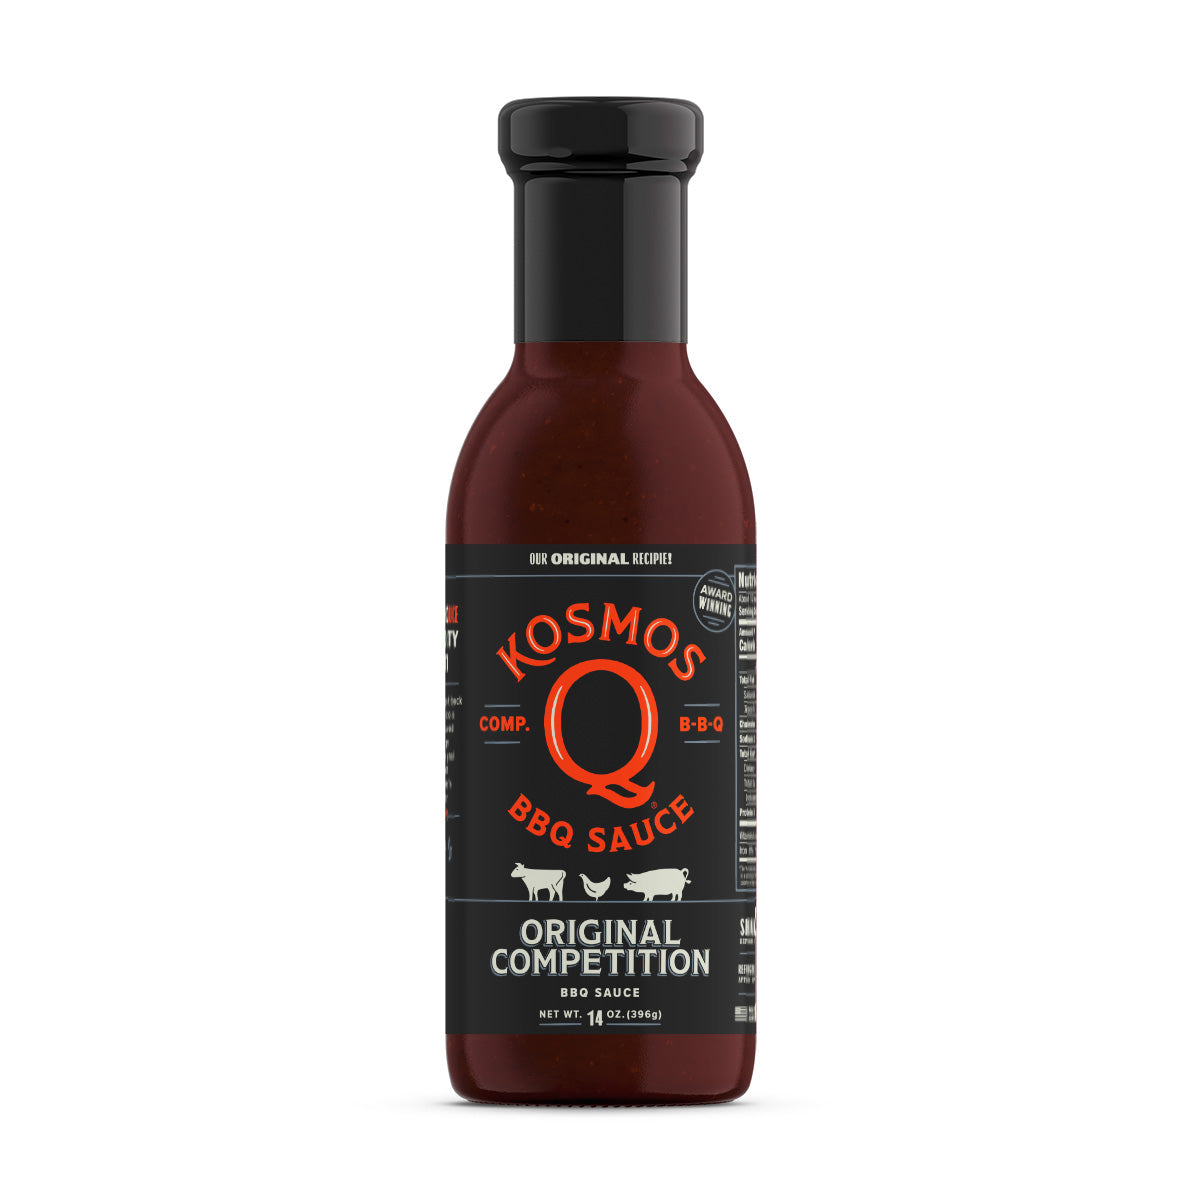 Kosmo's Q BBQ Sauce Kosmos Q Competition BBQ Sauce